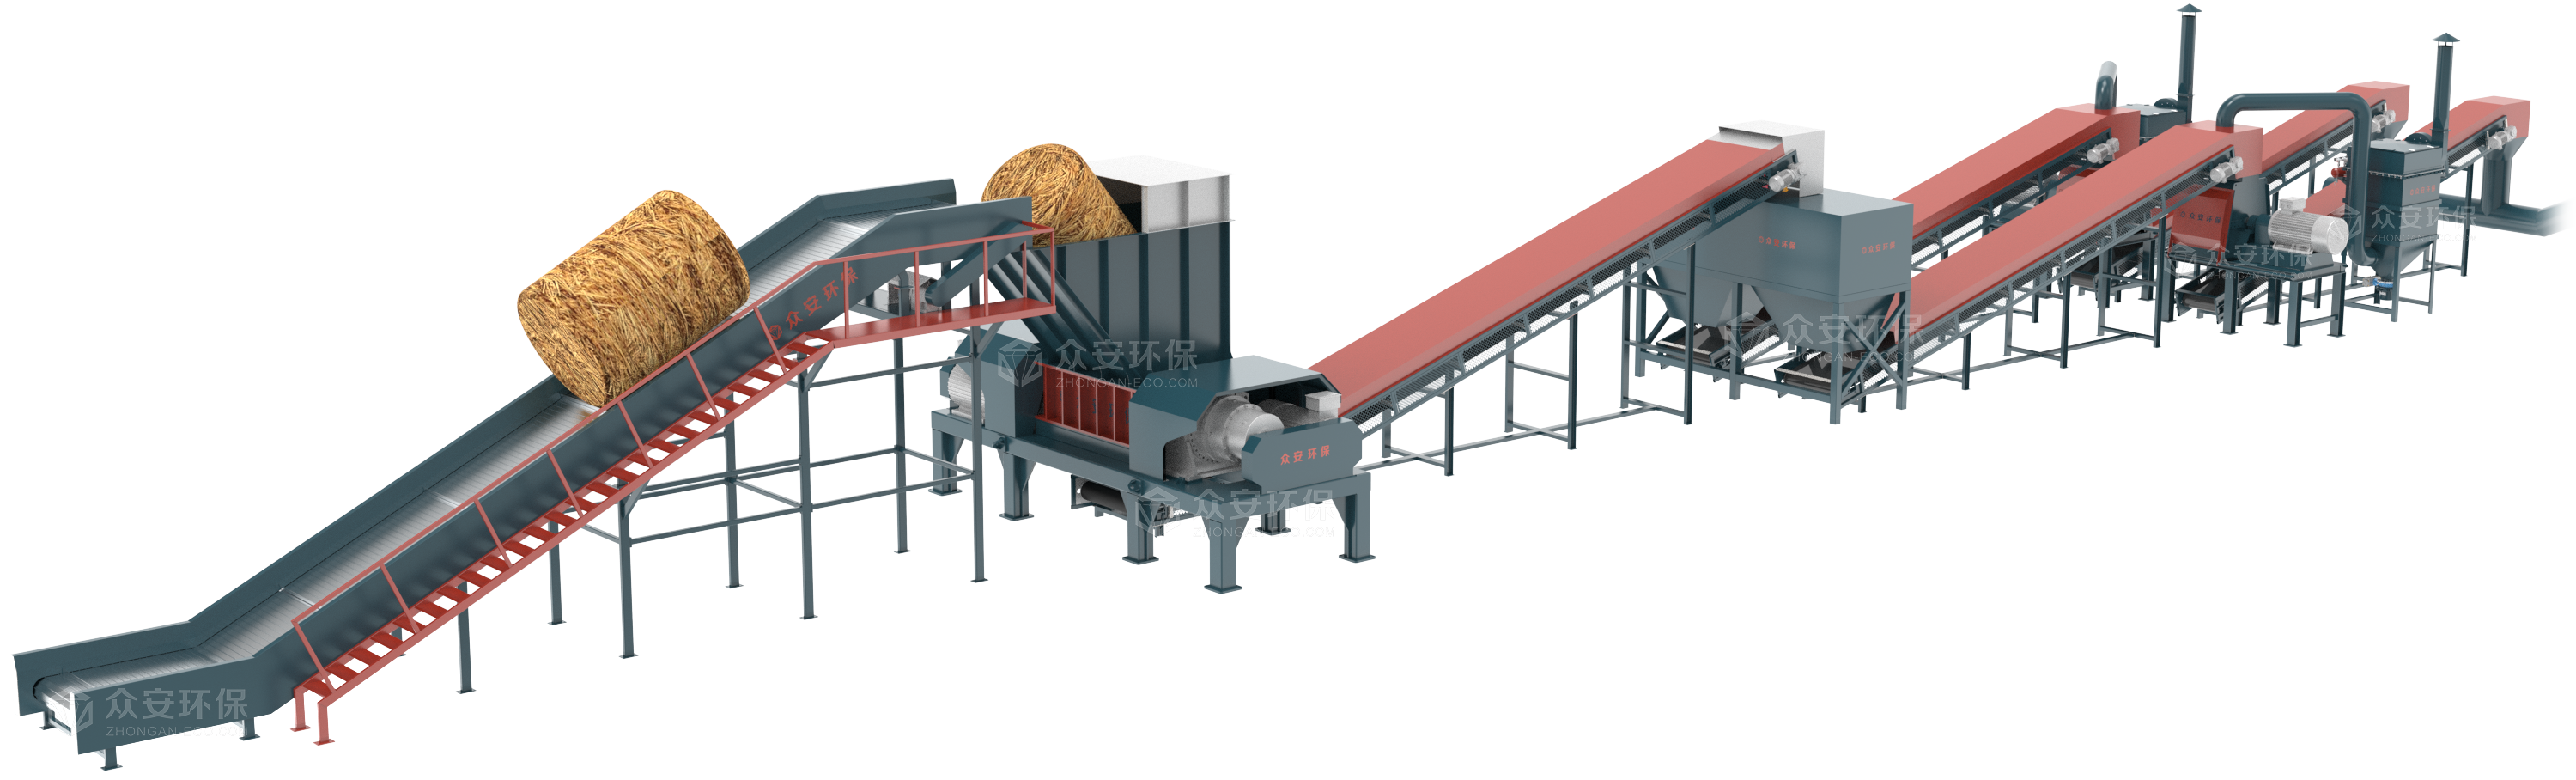 Sistema de trituración de biomasa para central eléctrica (4)